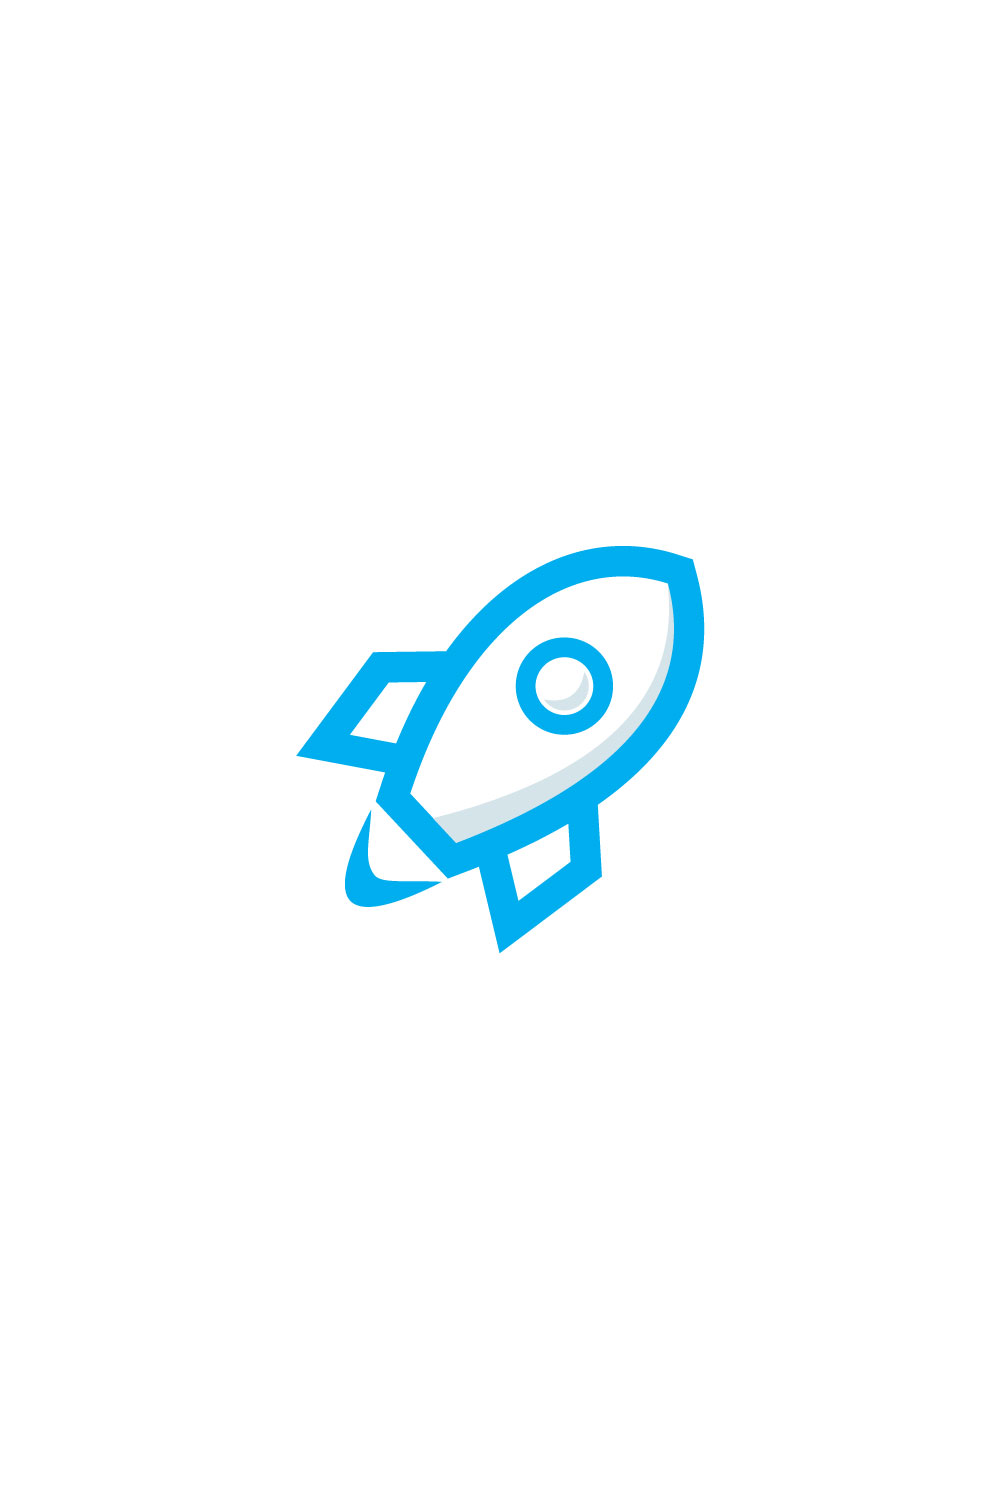 Rocket Logo Vector pinterest image.